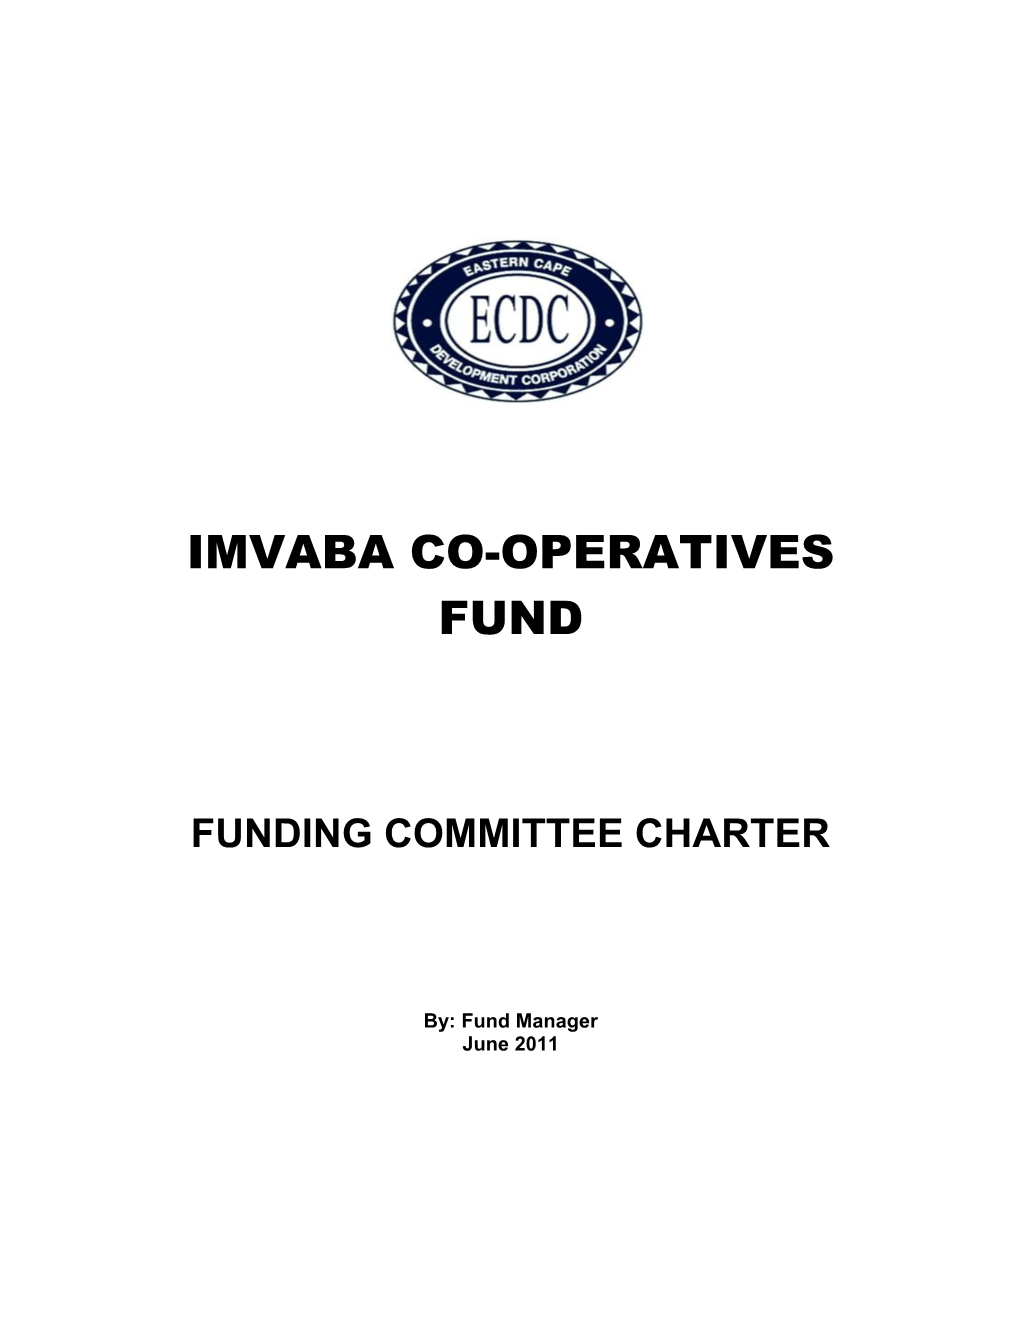 Imvaba Co-Operatives Fund